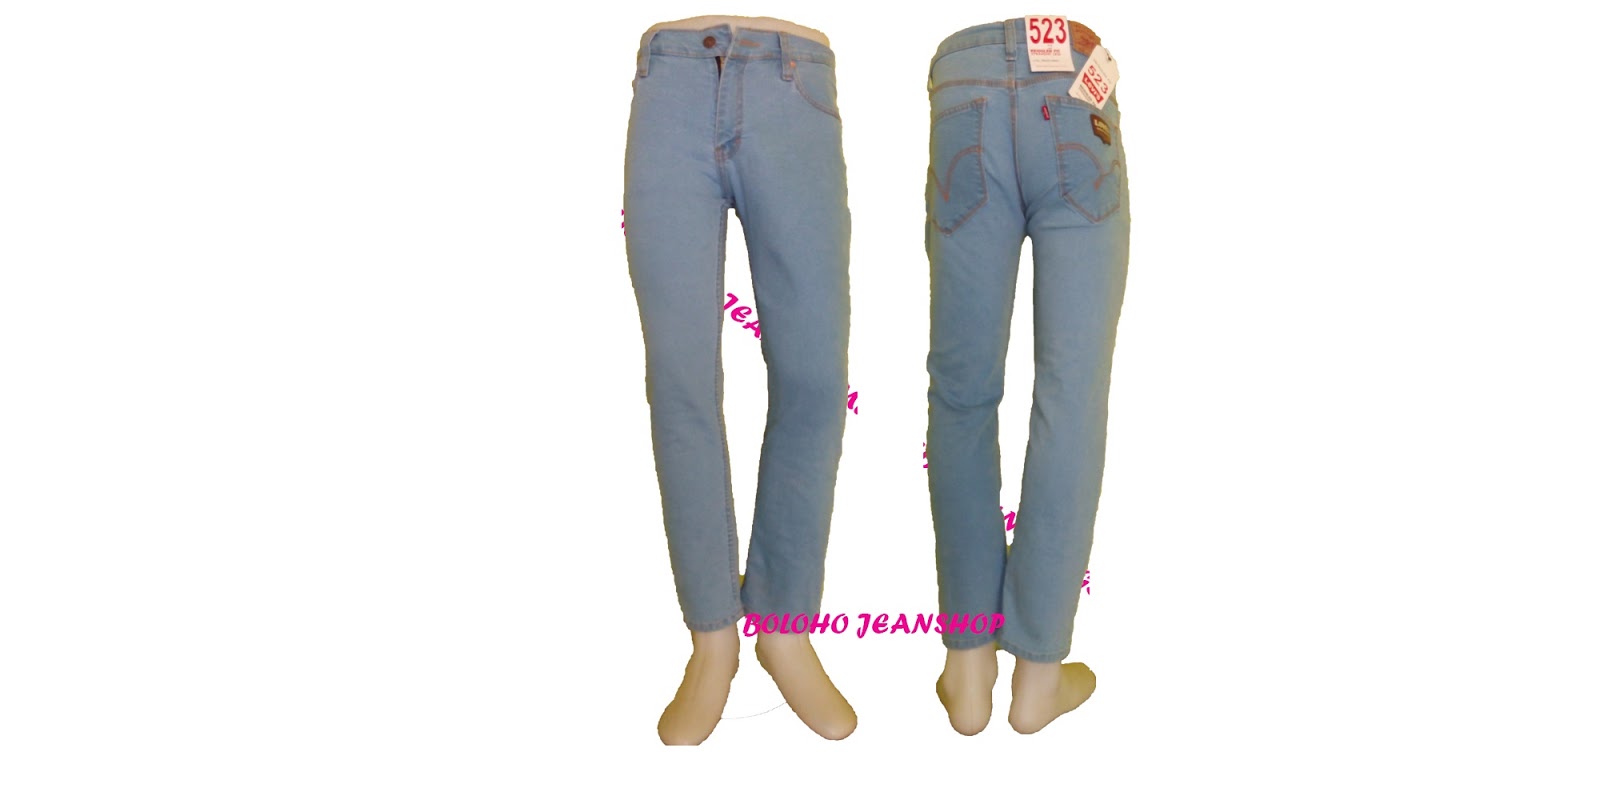  Celana Jeans Murah Pontianak 085794070649 Celana Jeans 